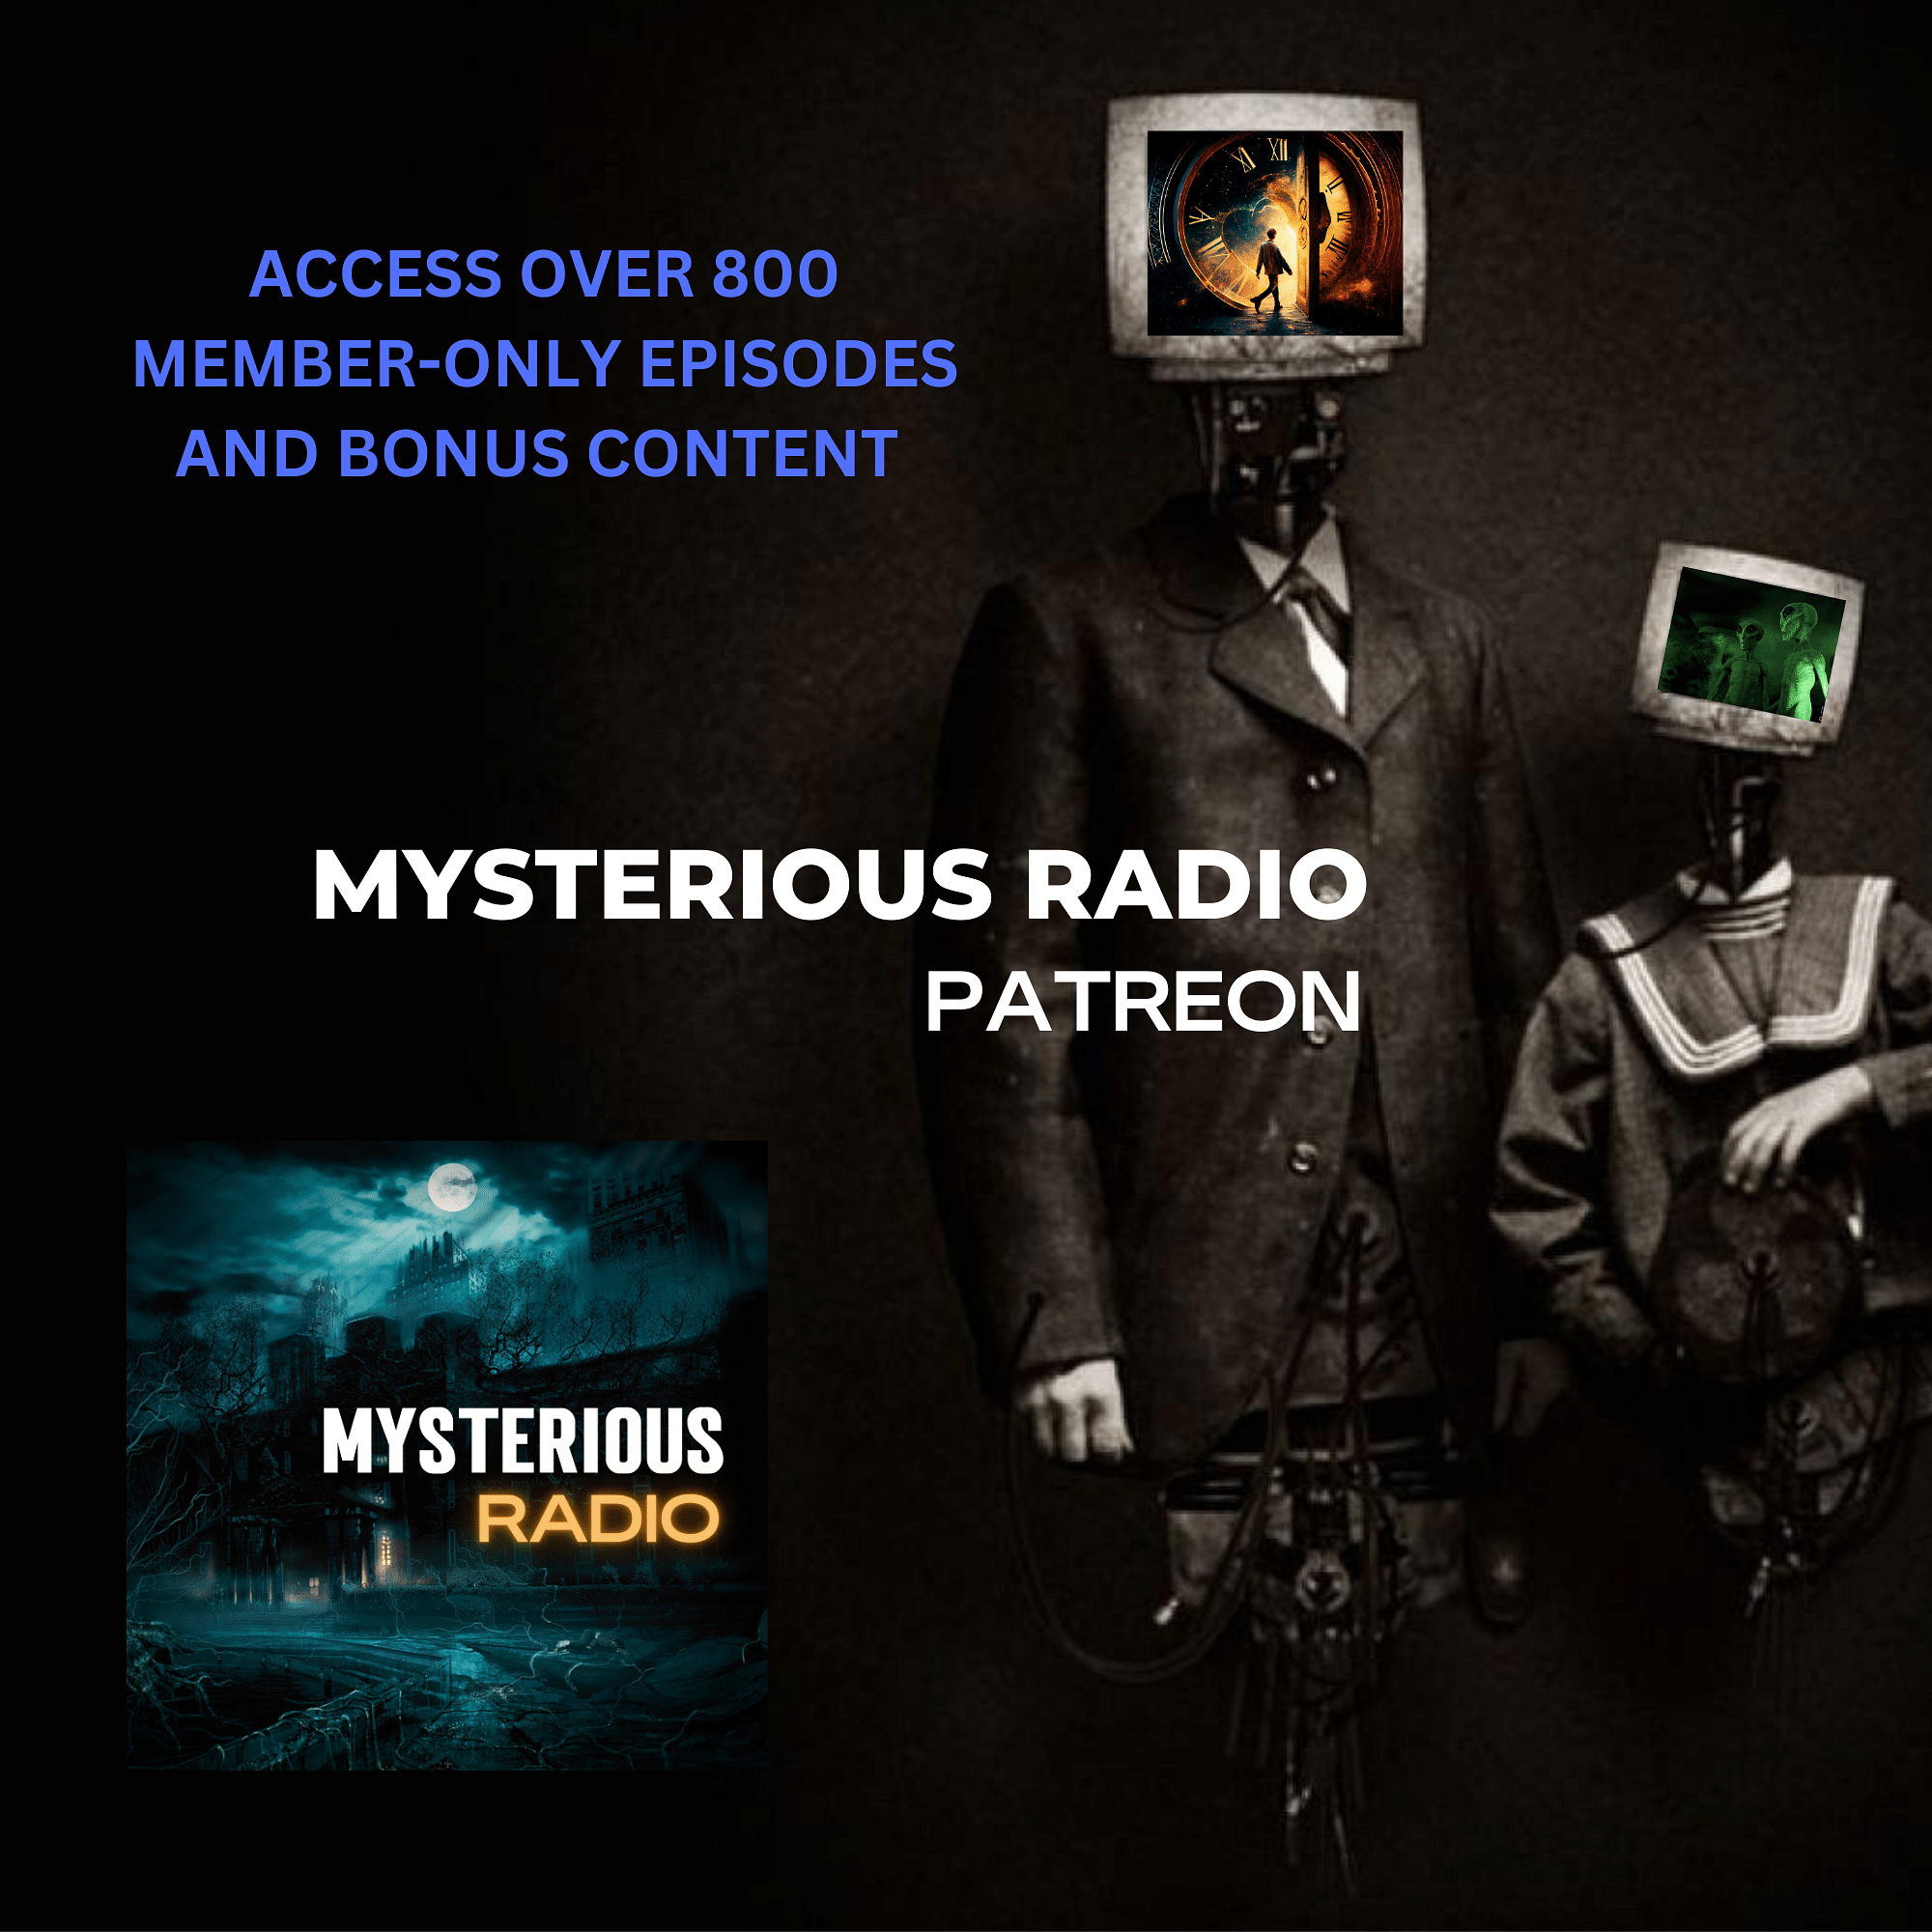 Mysterious Radio 